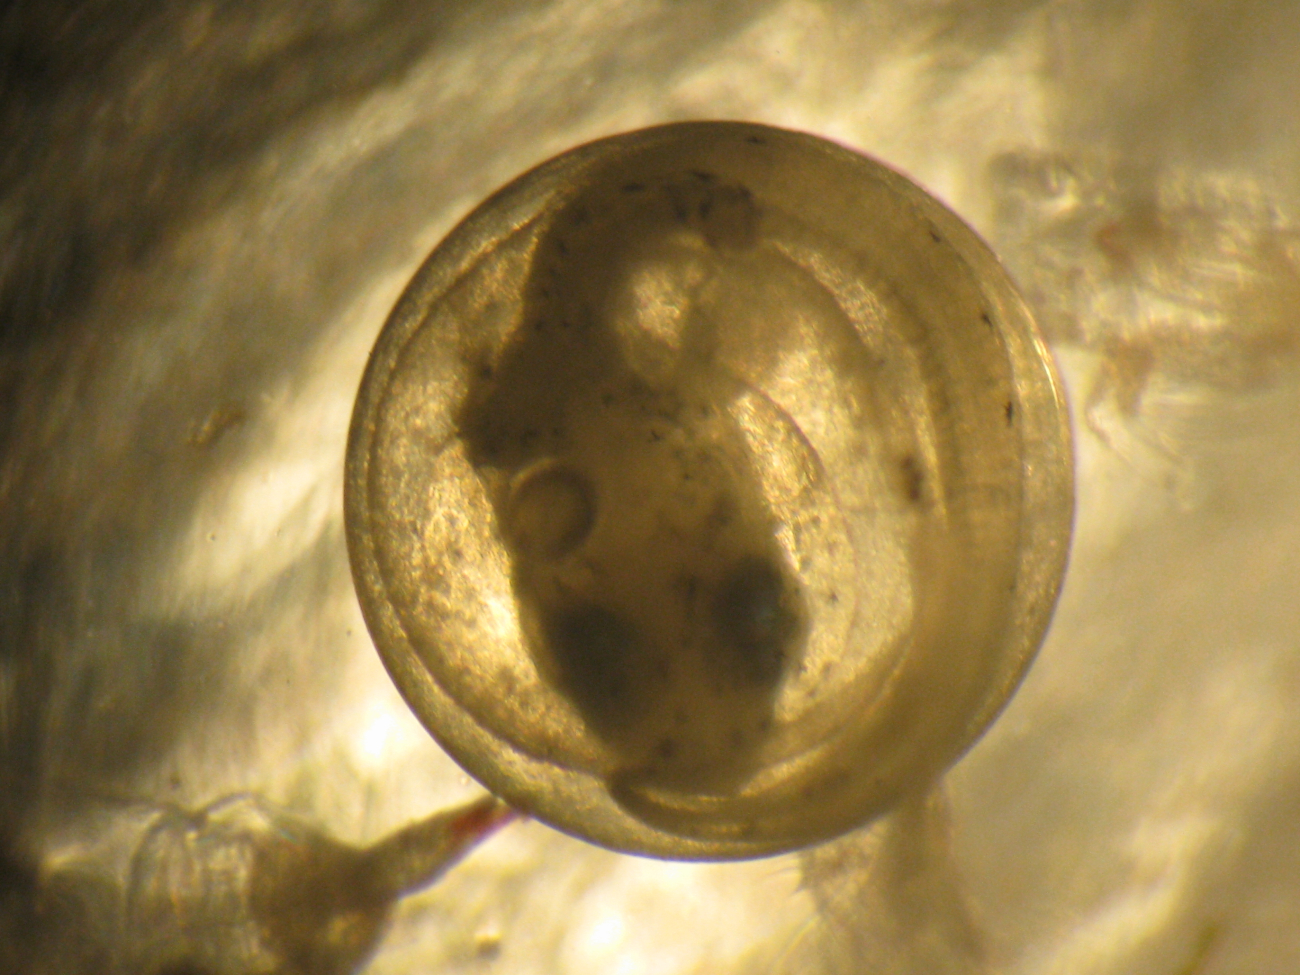 Through the microscope - fish egg